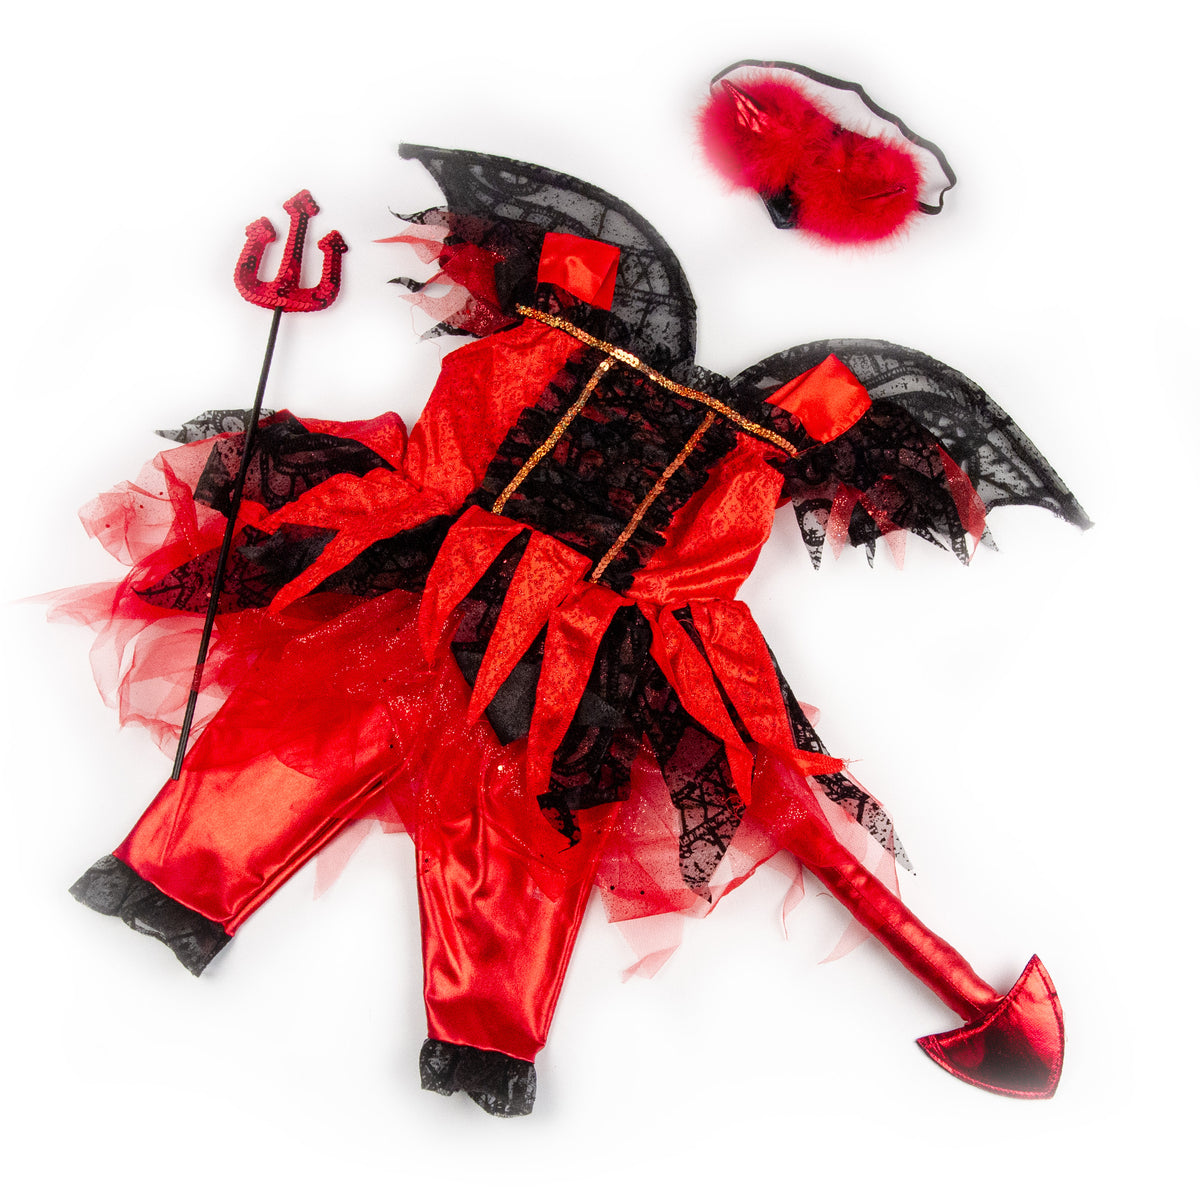 halloween devil costumes for kids